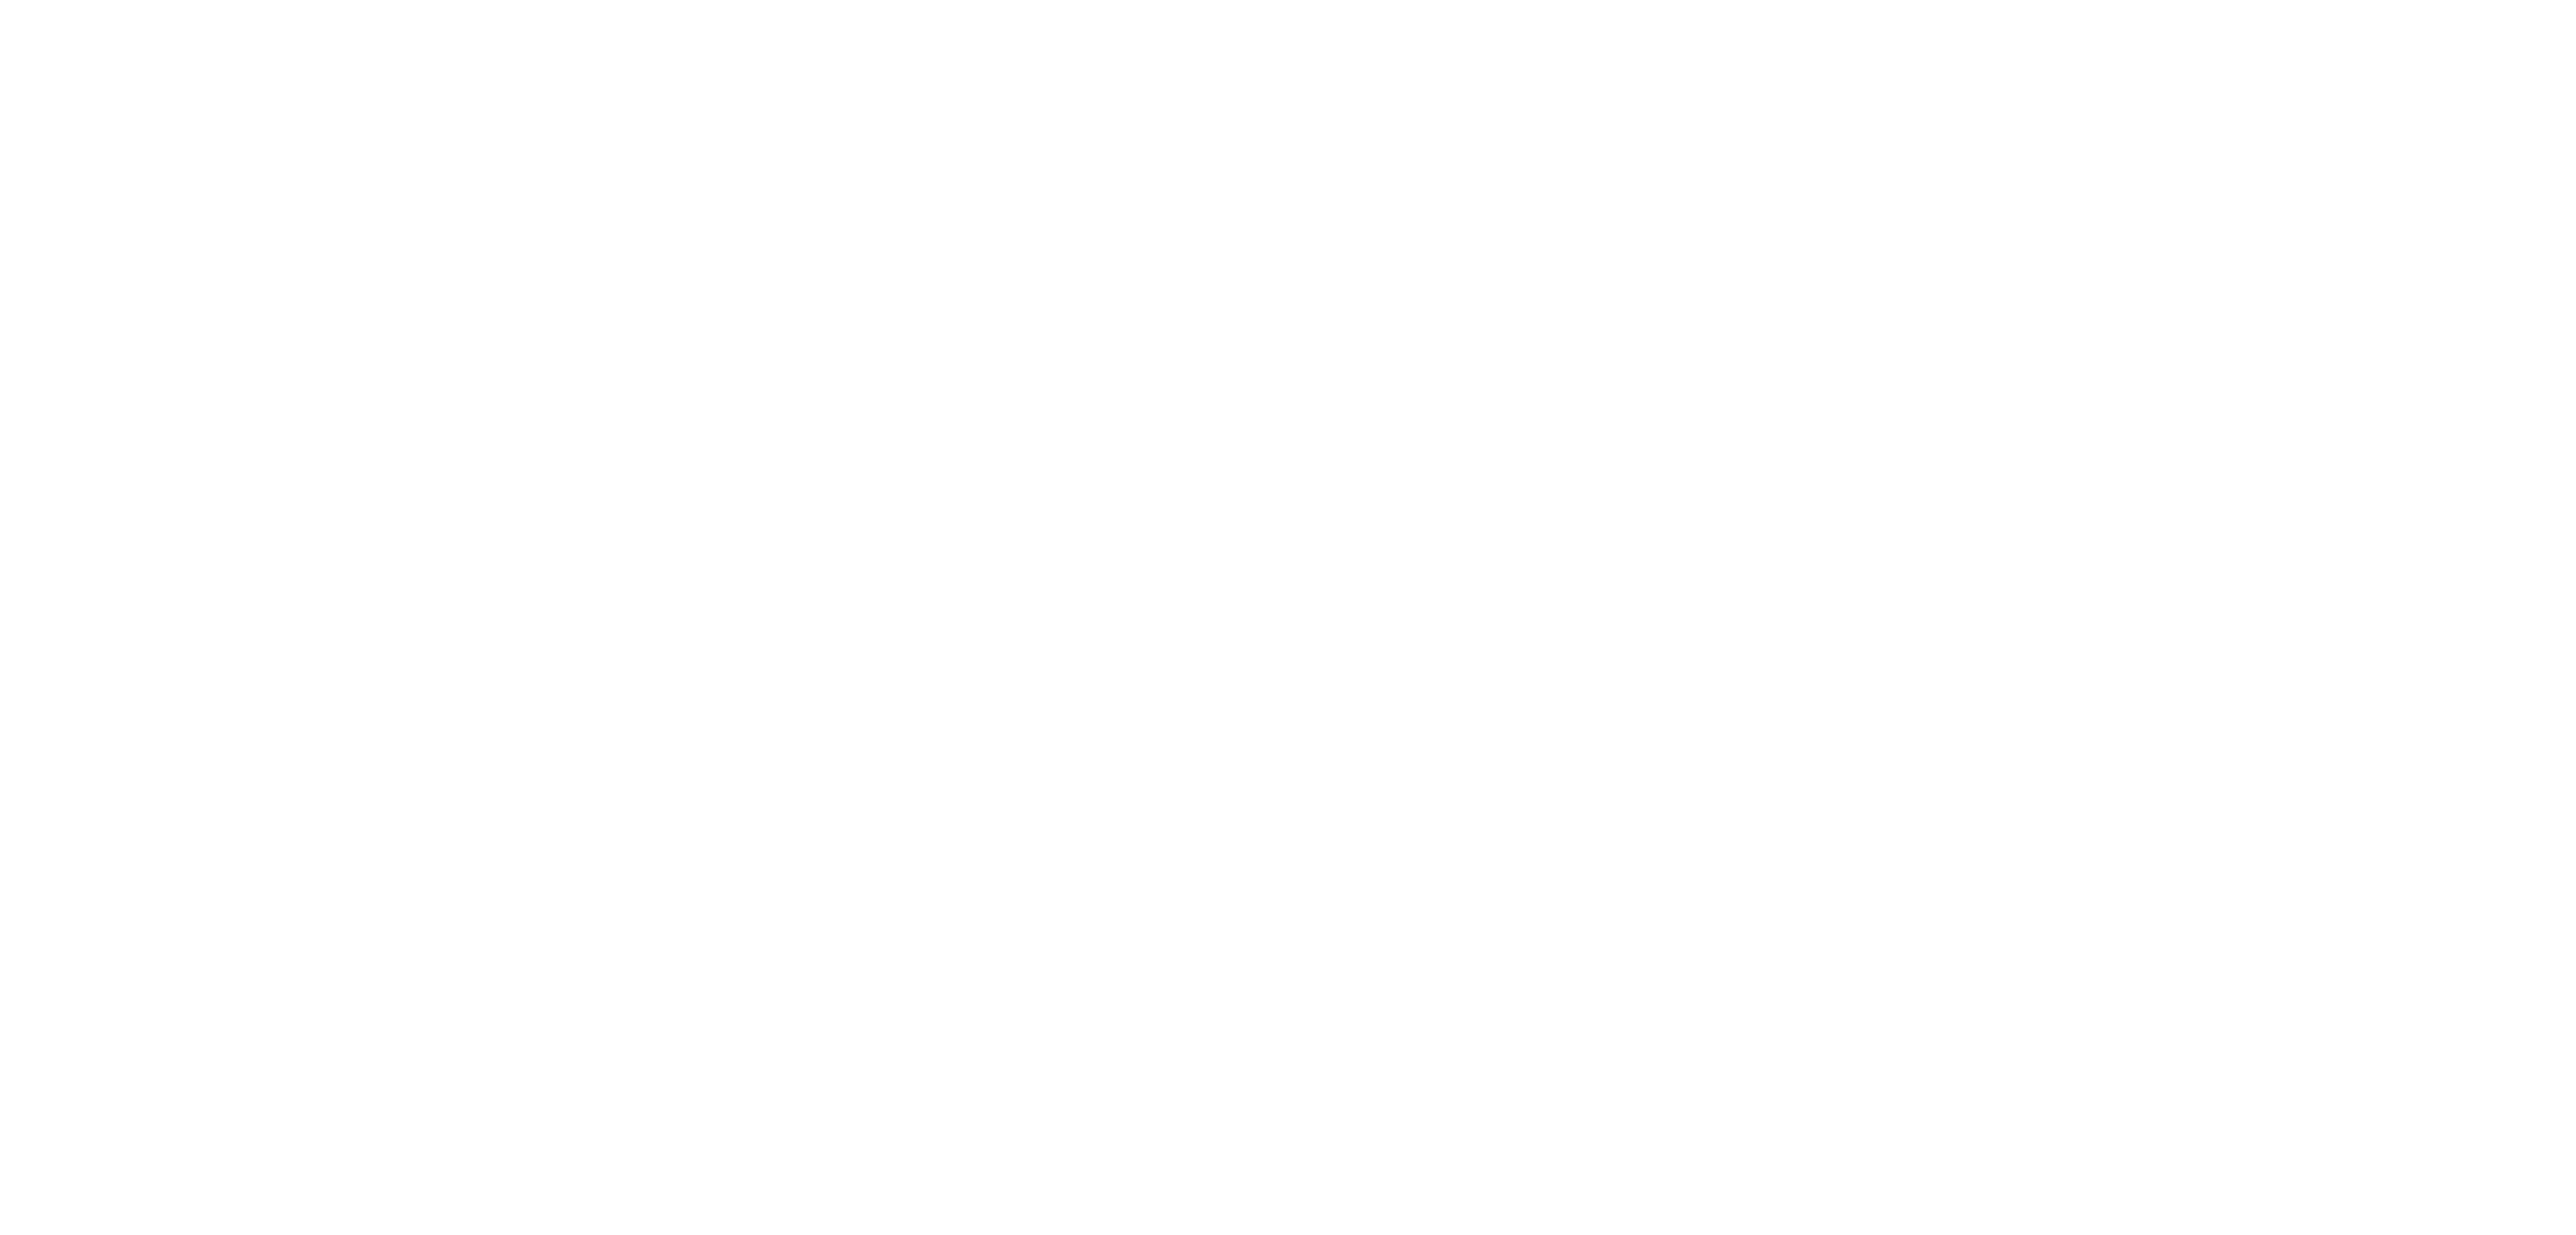 betclic group